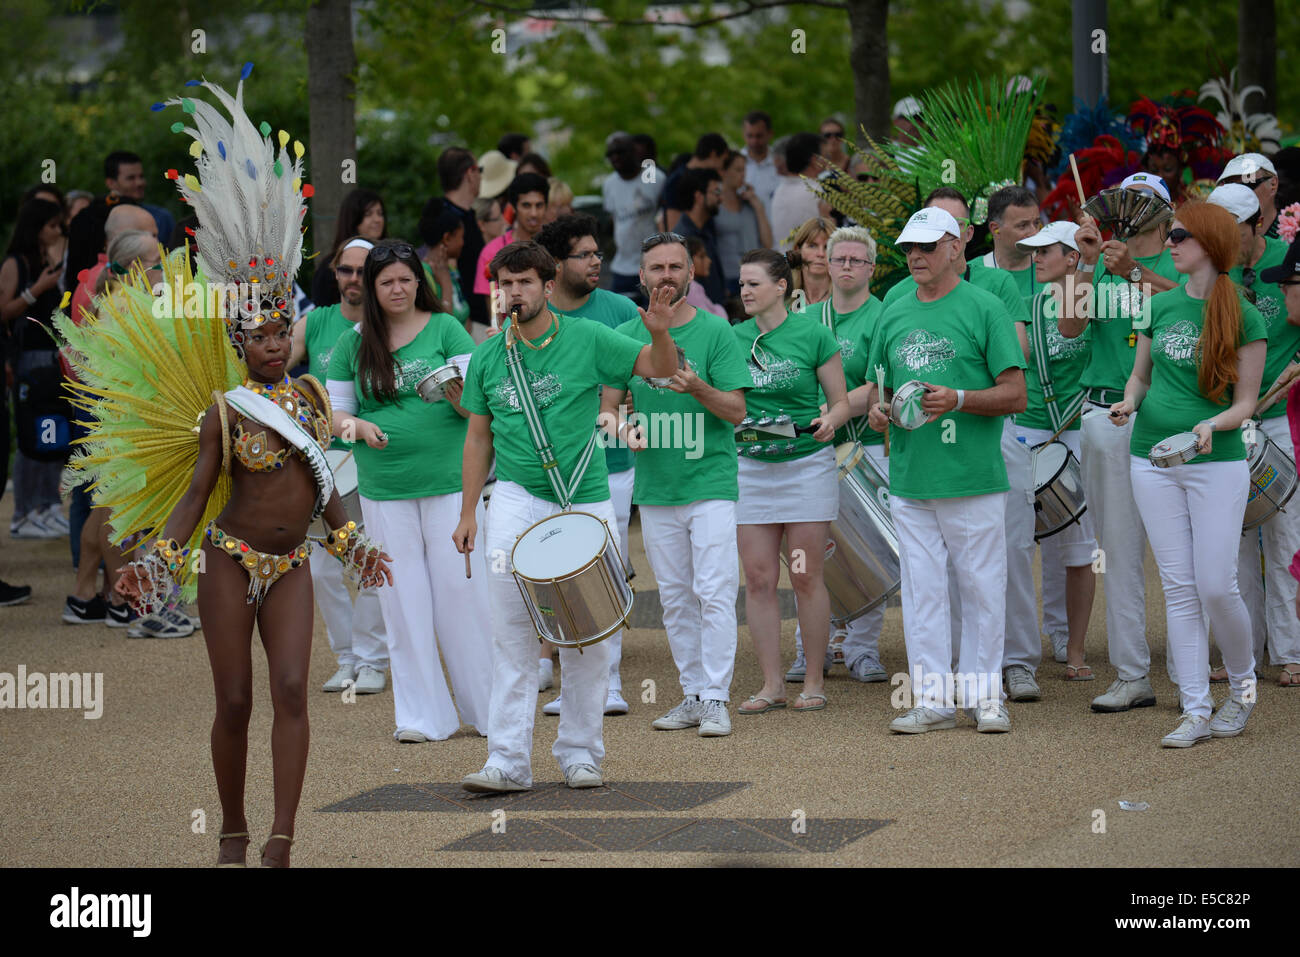 London, UK. 27th July, 2014. Carnival Samba dancer from Paraiso